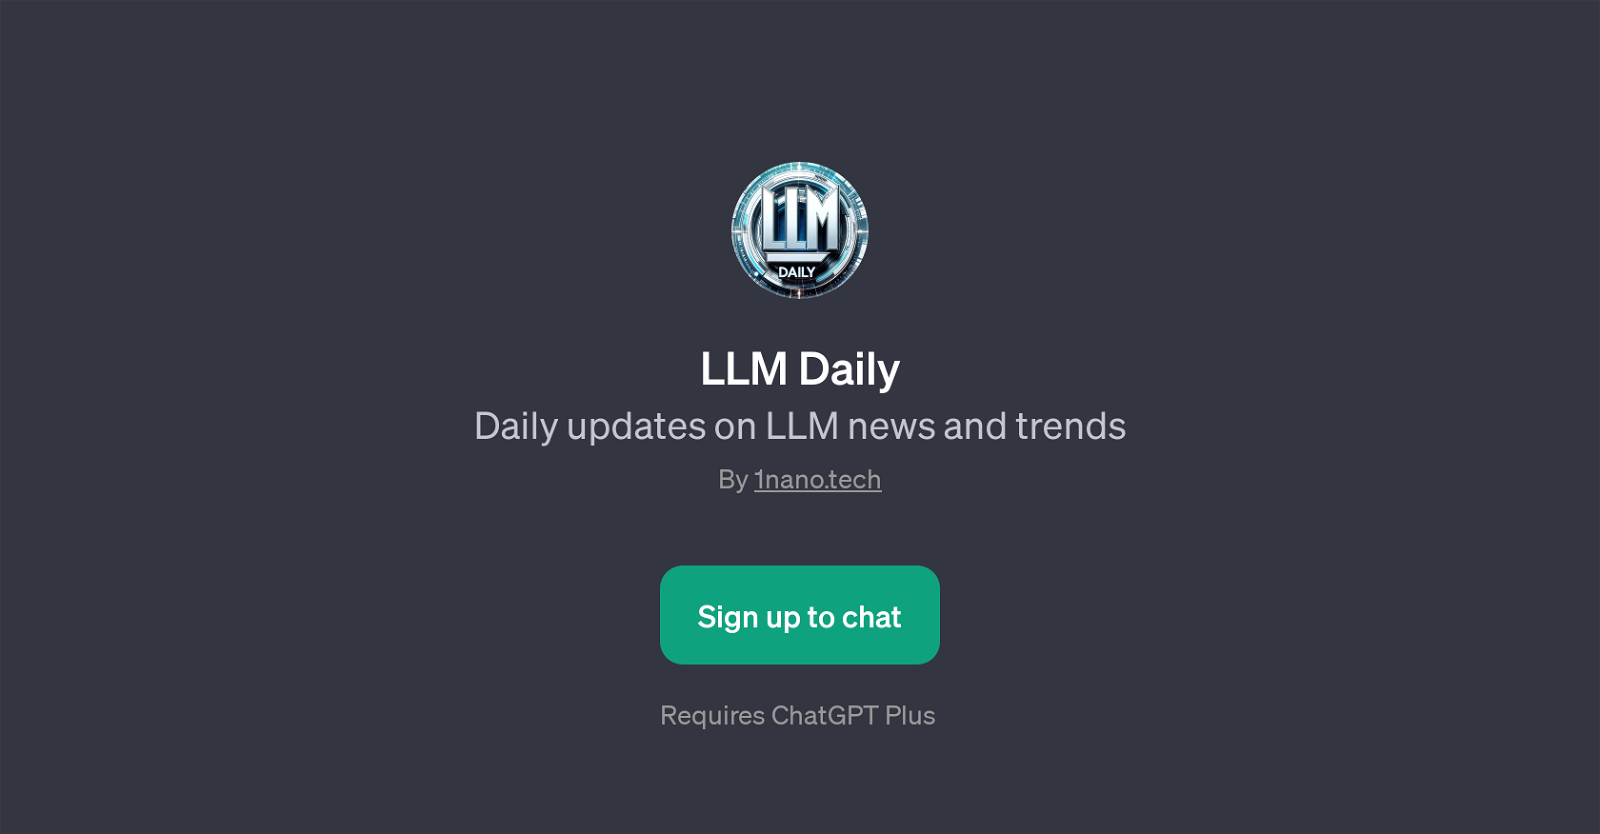 LLM Daily website